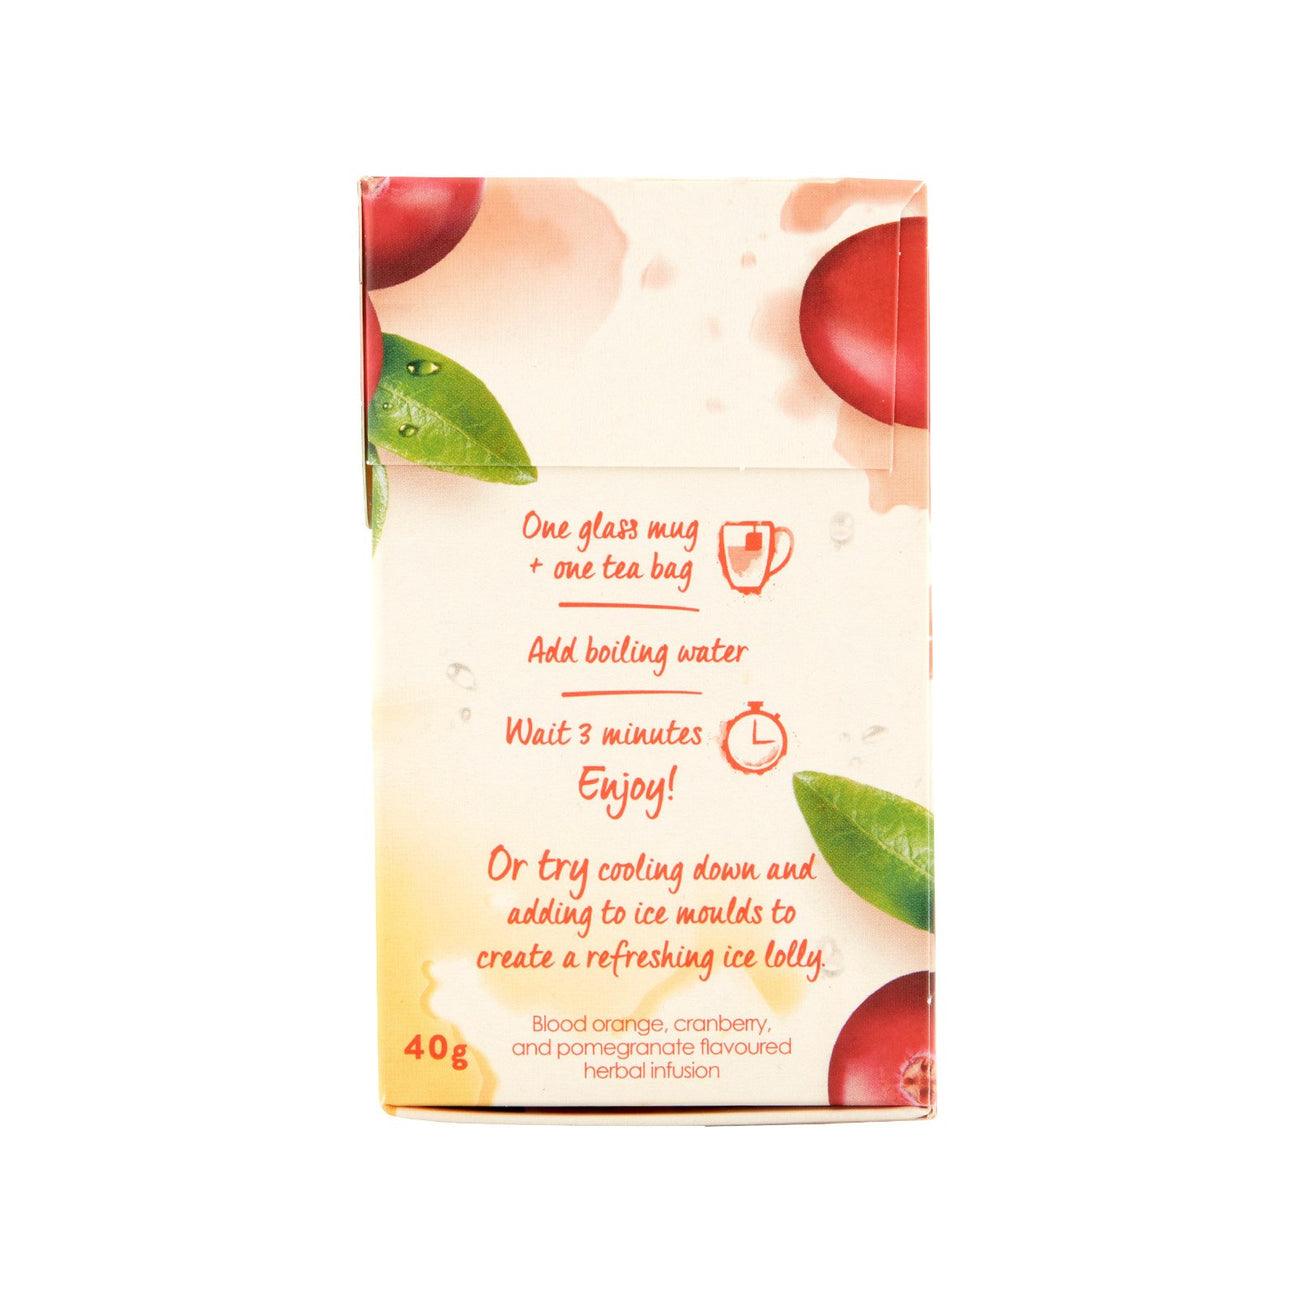 Twinings - Blood Orange & Cranberry Tea Bags (Non Enveloped) Pack of 20 Tea Bags - Vending Superstore